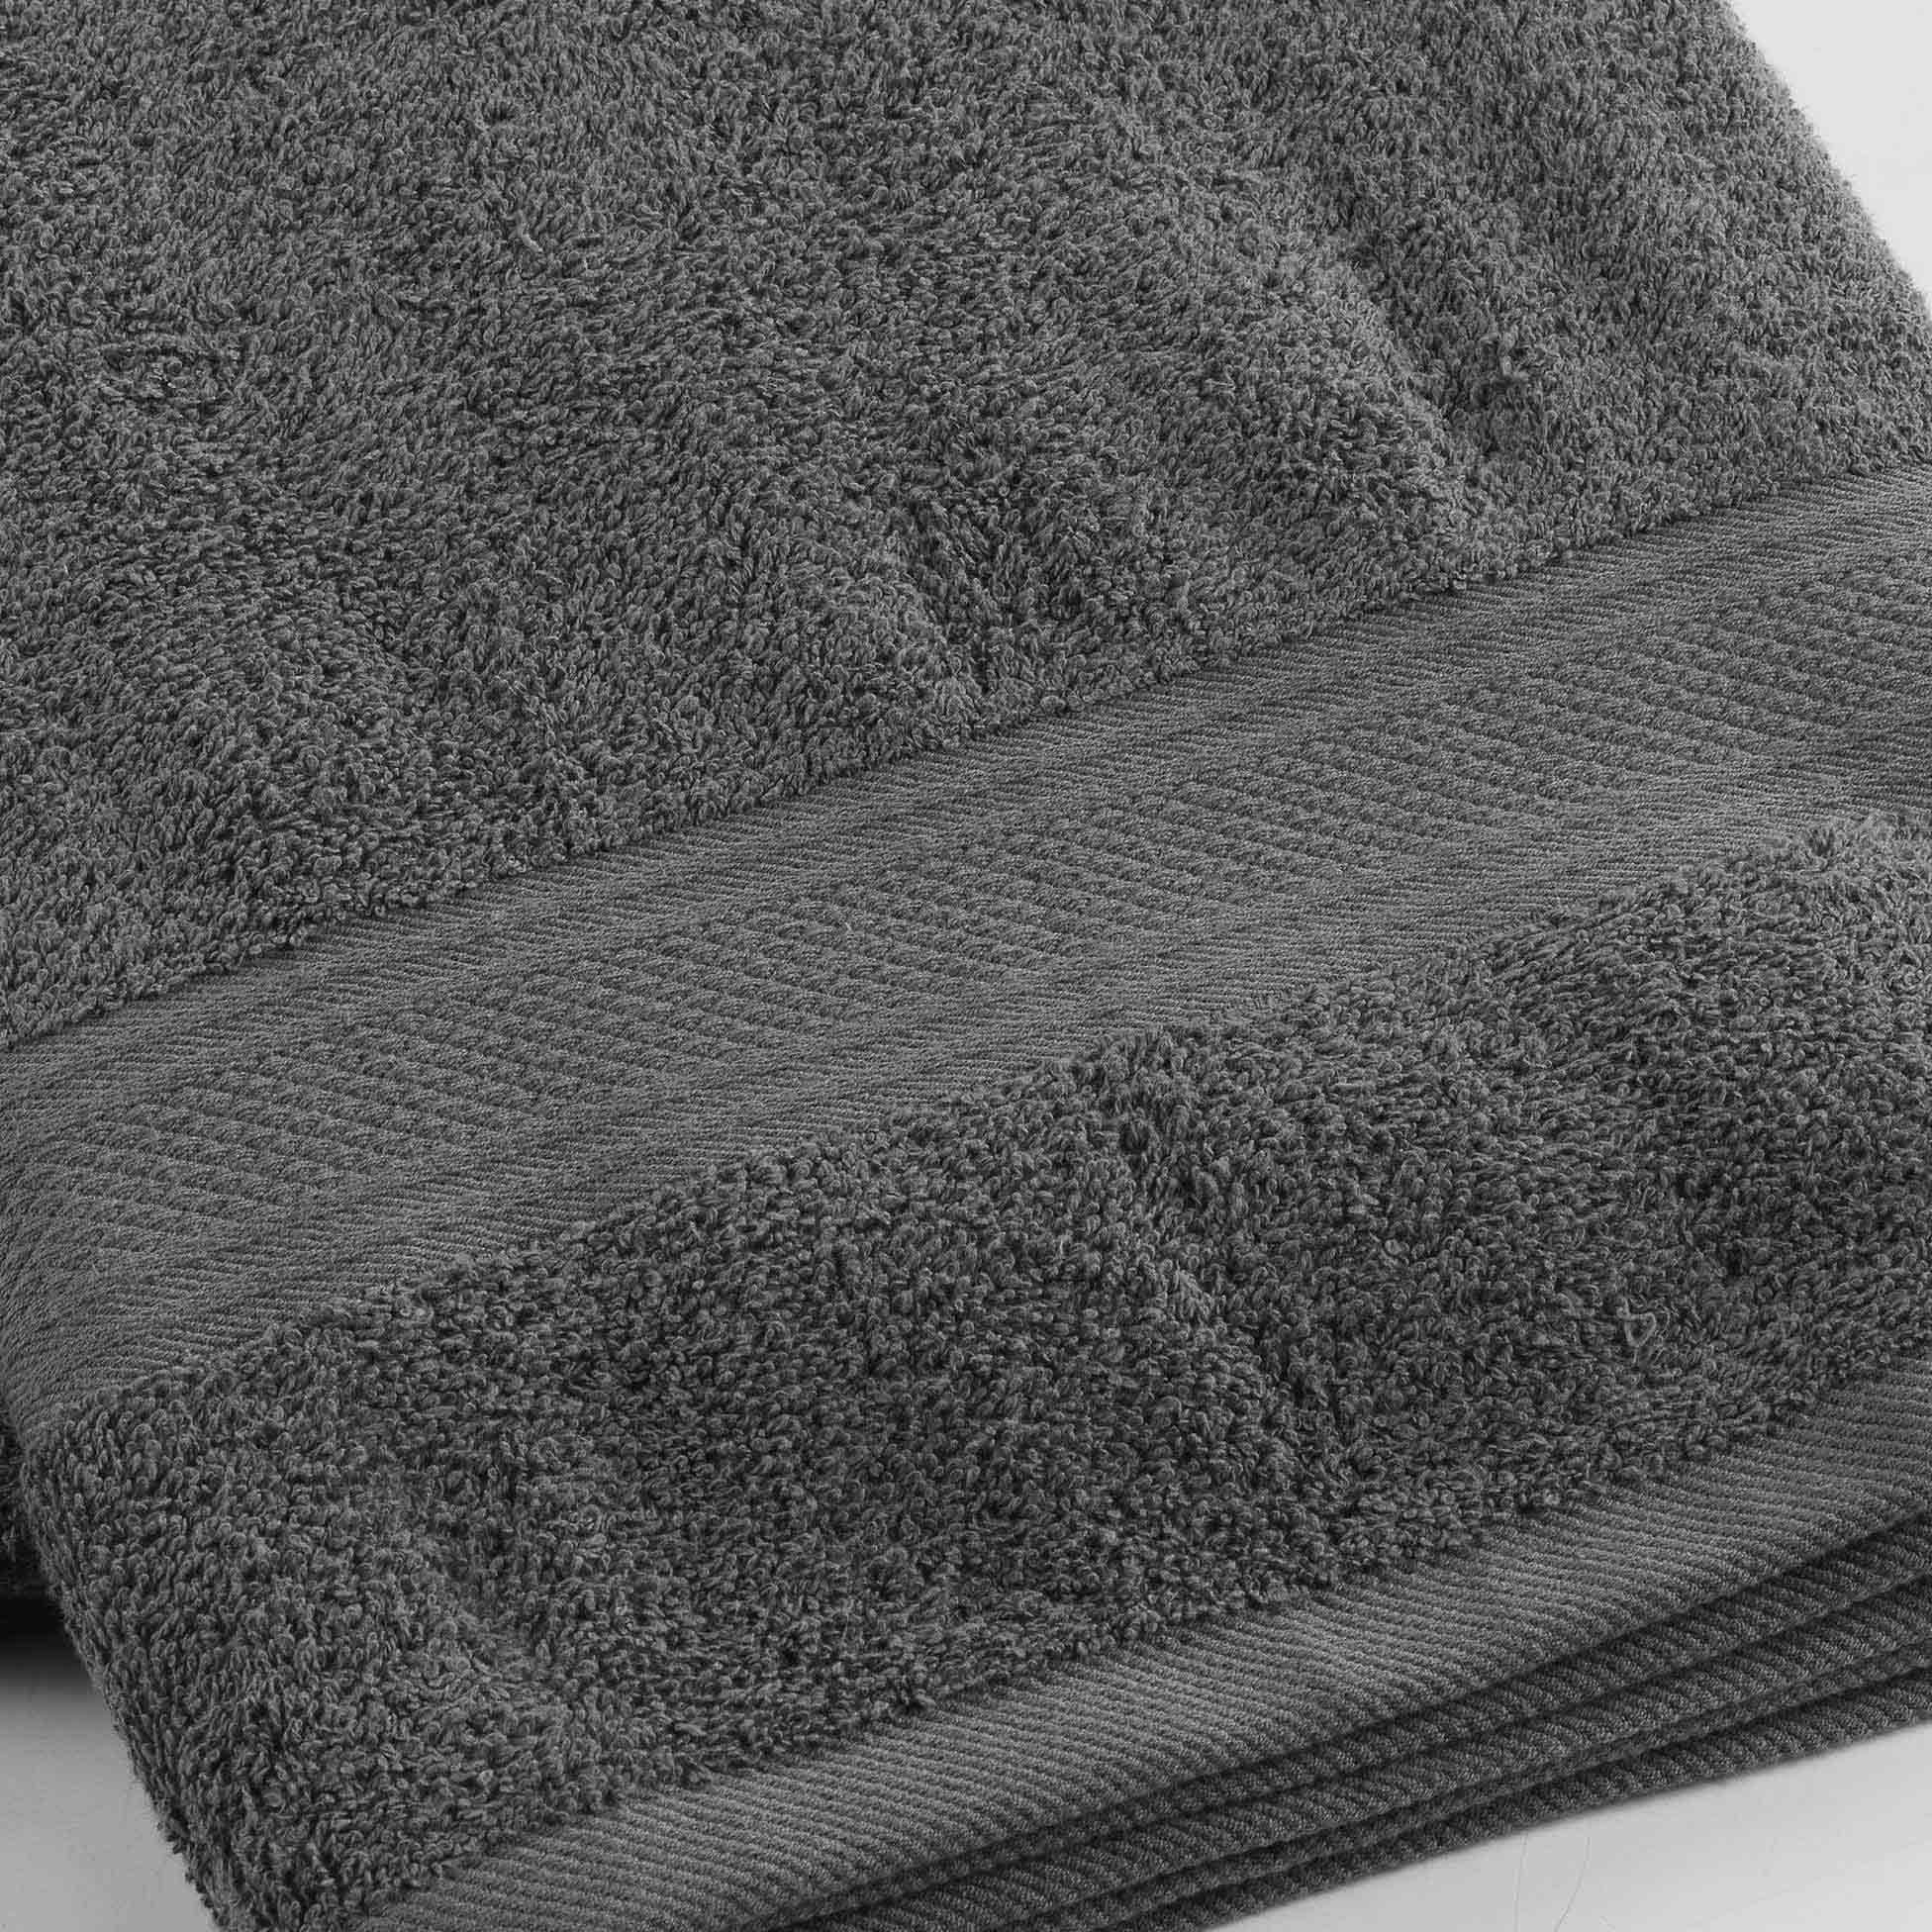 Baumwolle Dunkelgrau 50x90cm, Frottee Gästehandtuch Handtücher Handtuch 100% dynamic24 Handtuch 50x90cm Handtuch